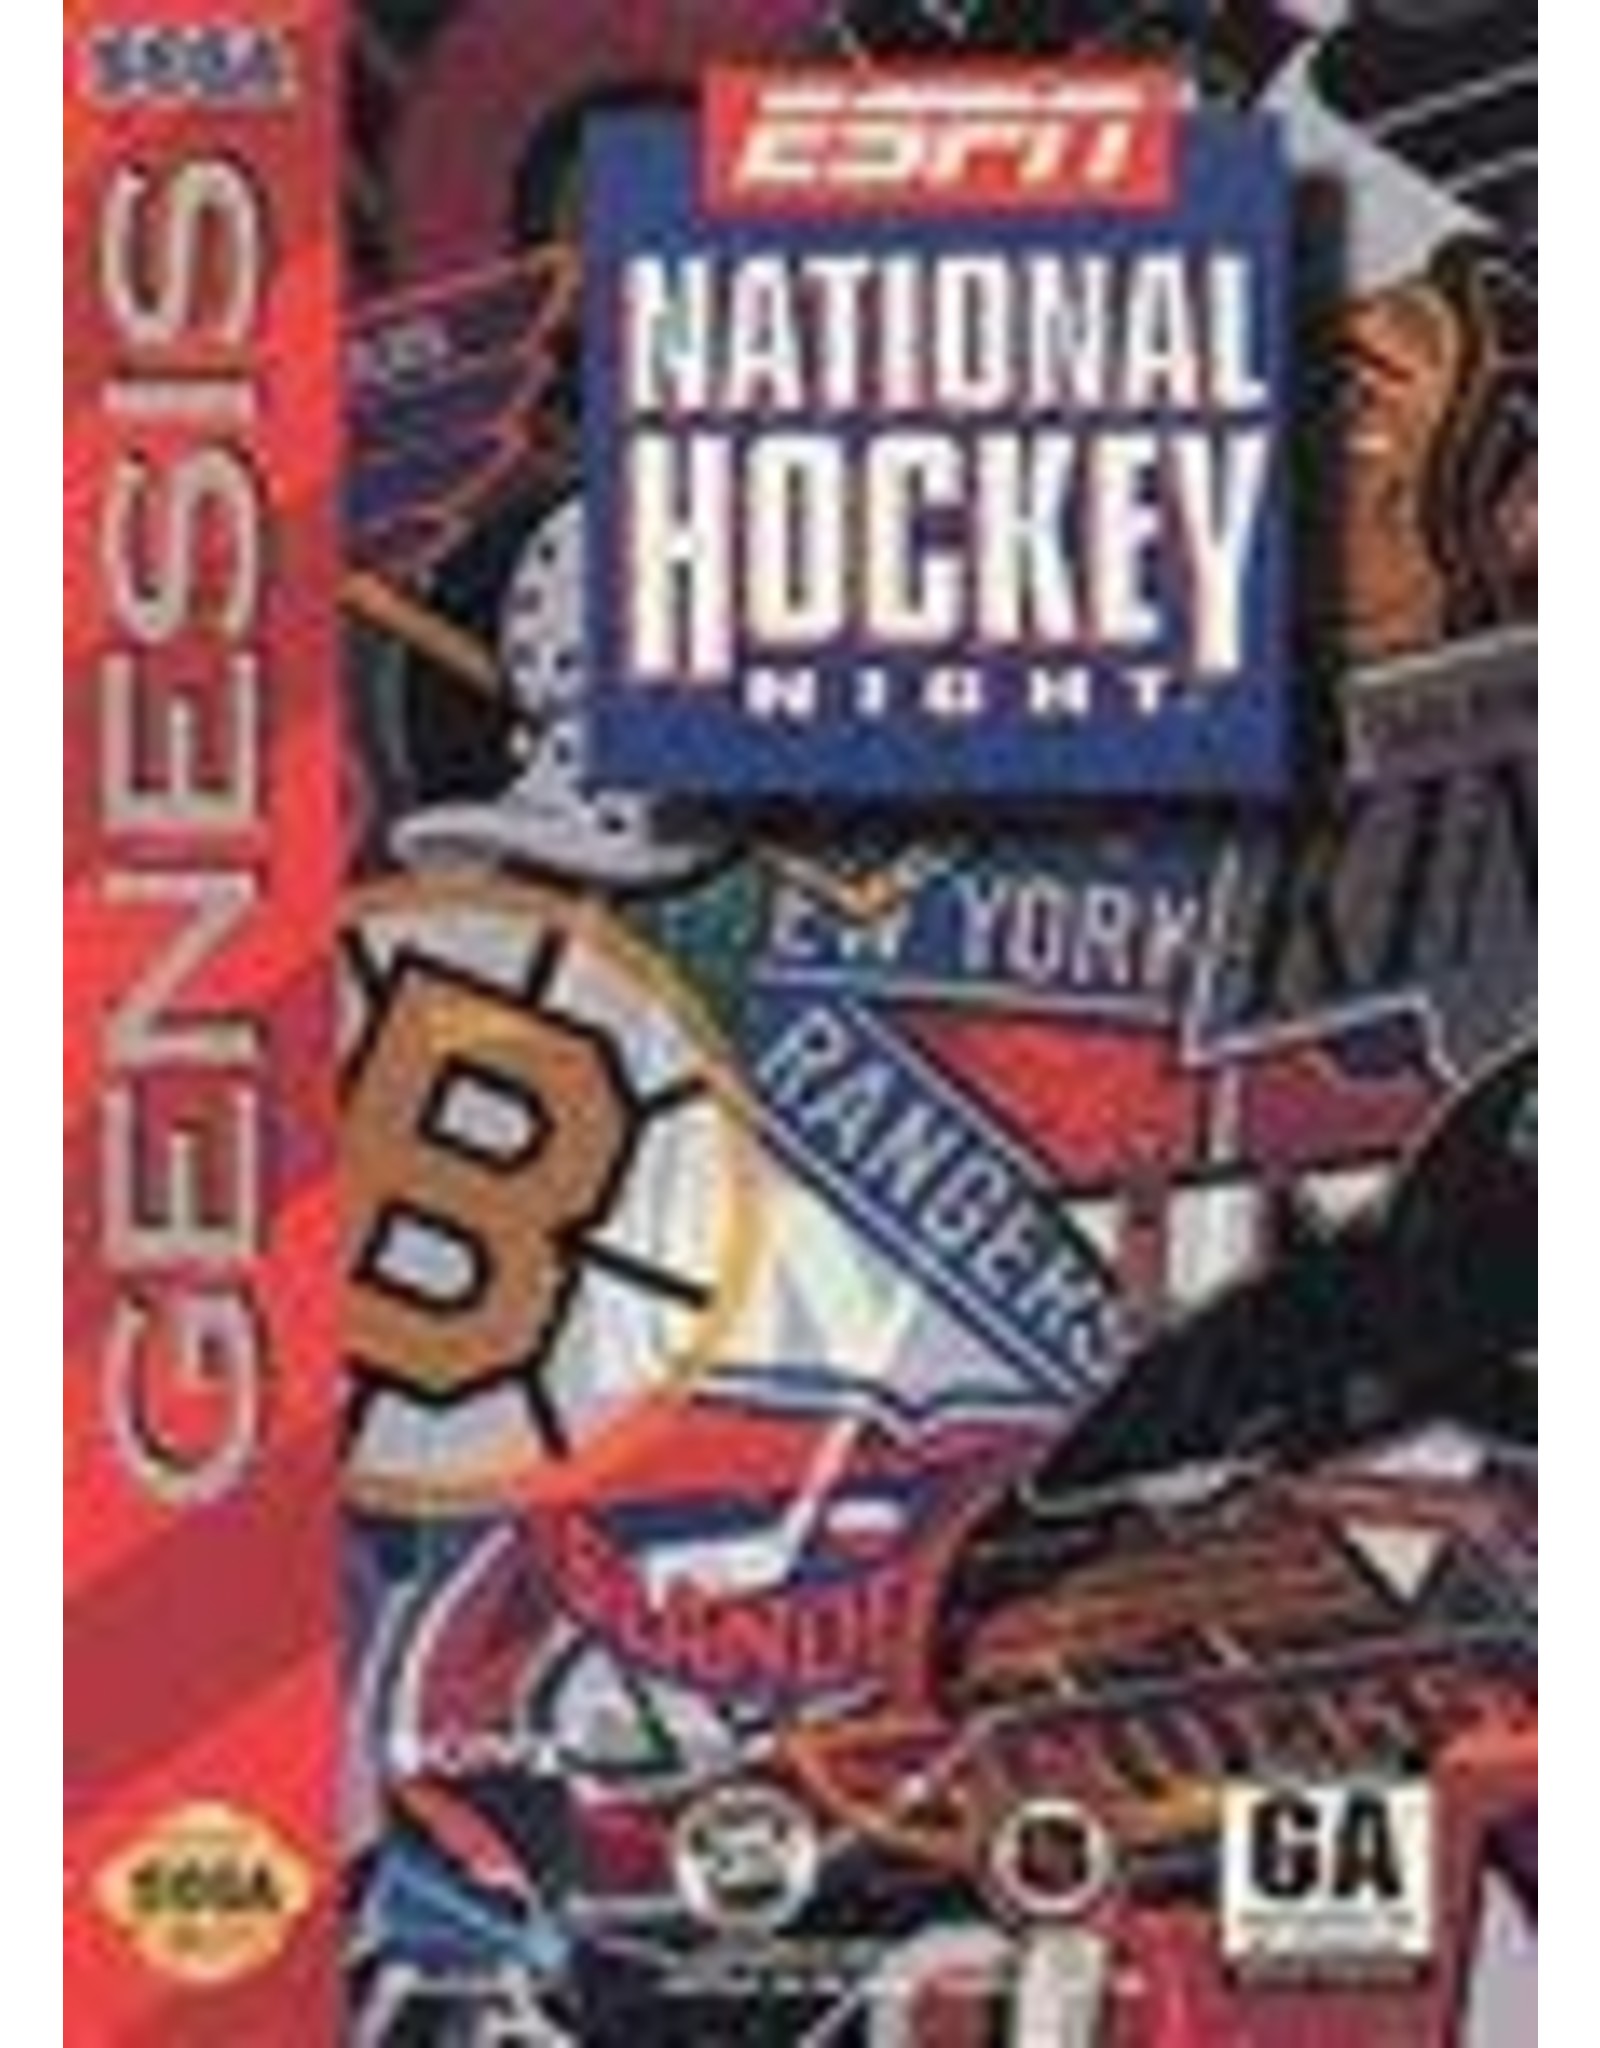 Sega Genesis ESPN National Hockey Night (Cart Only)